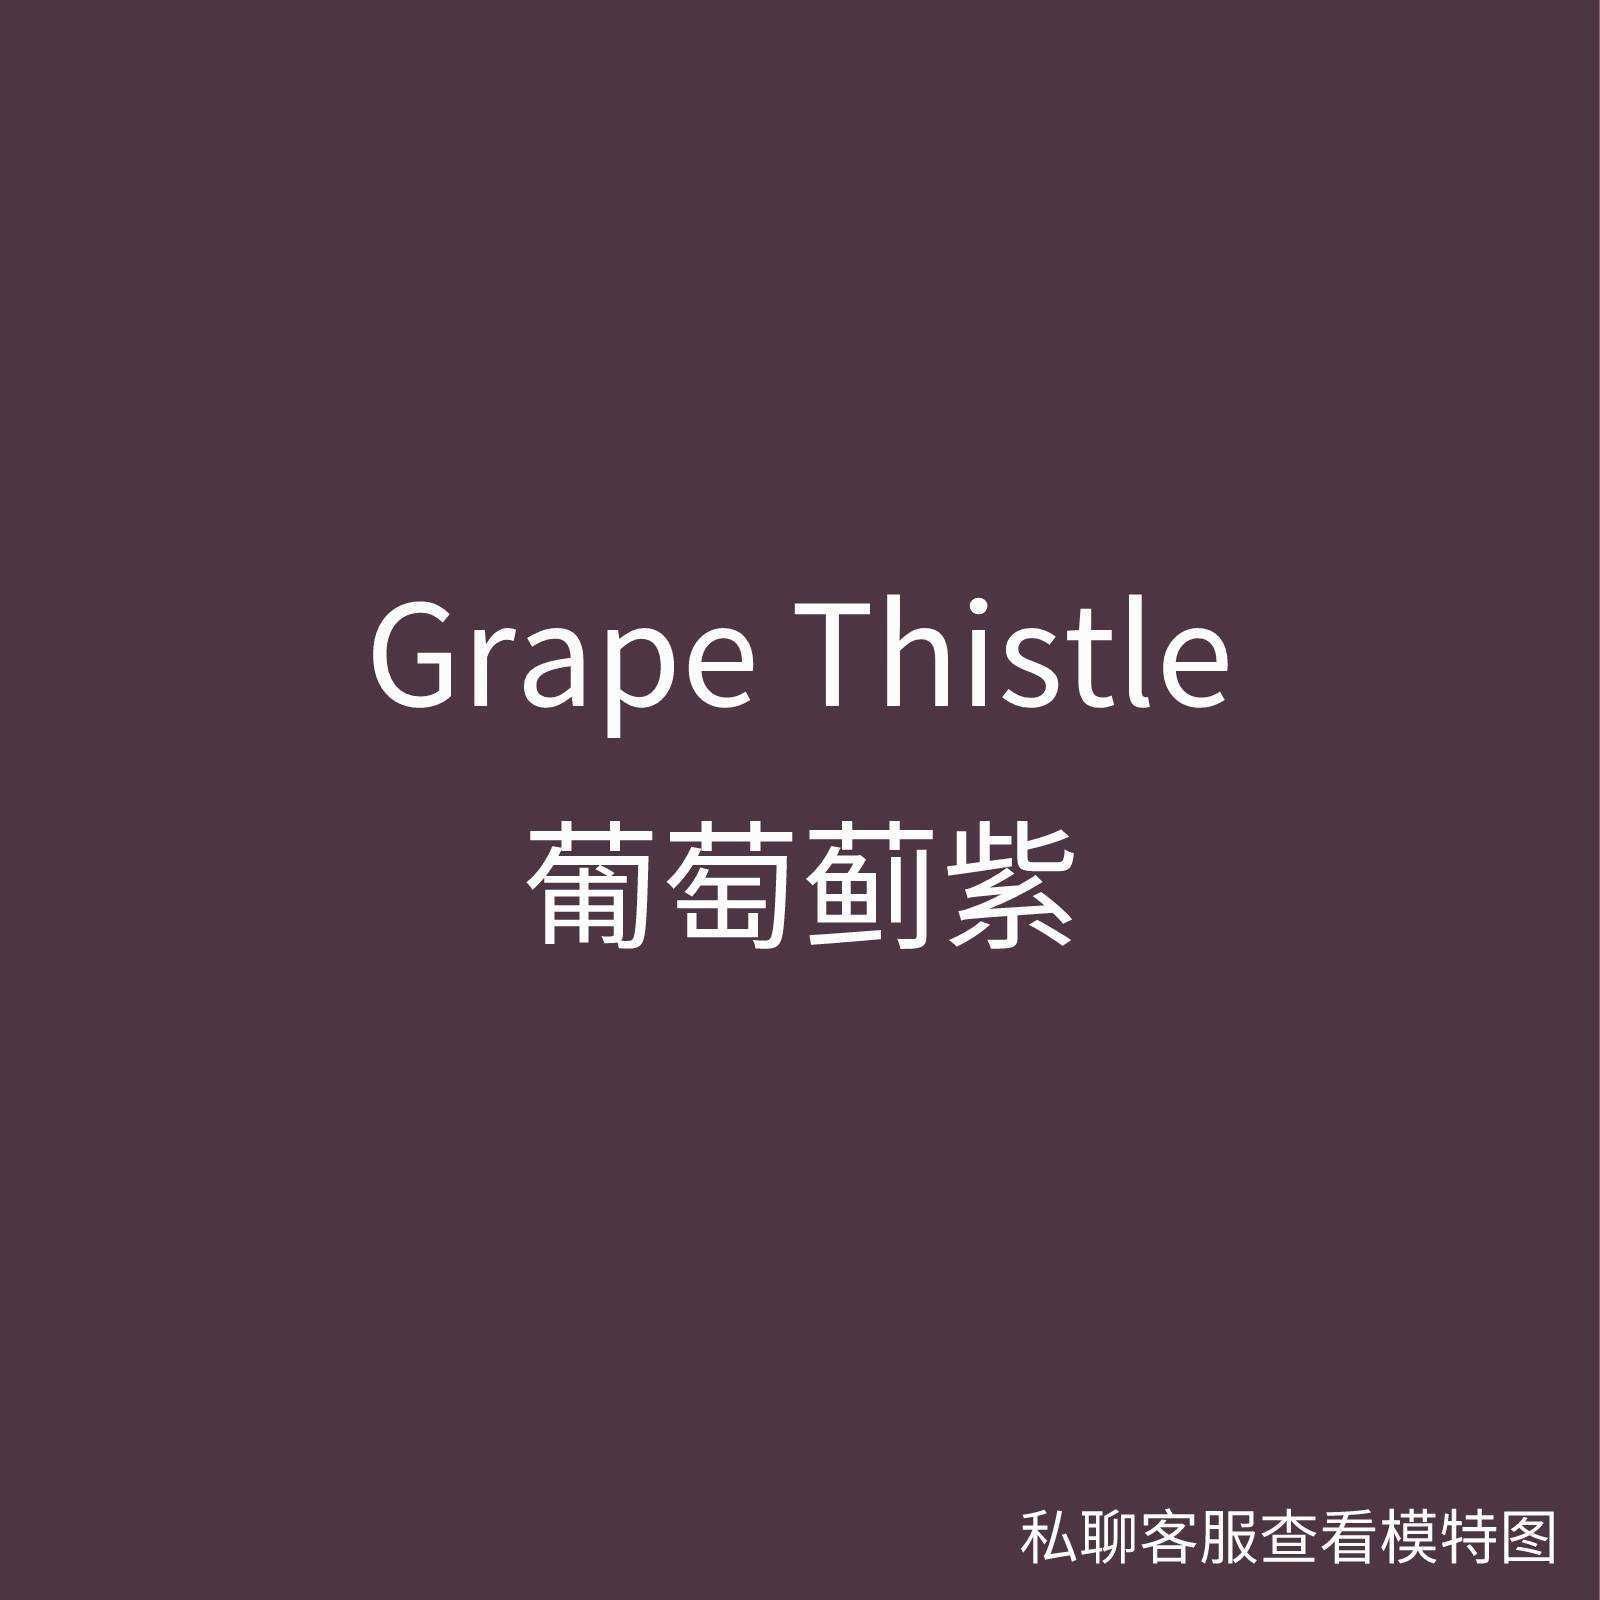 4 Inches/grape Thistle Grape Thistle